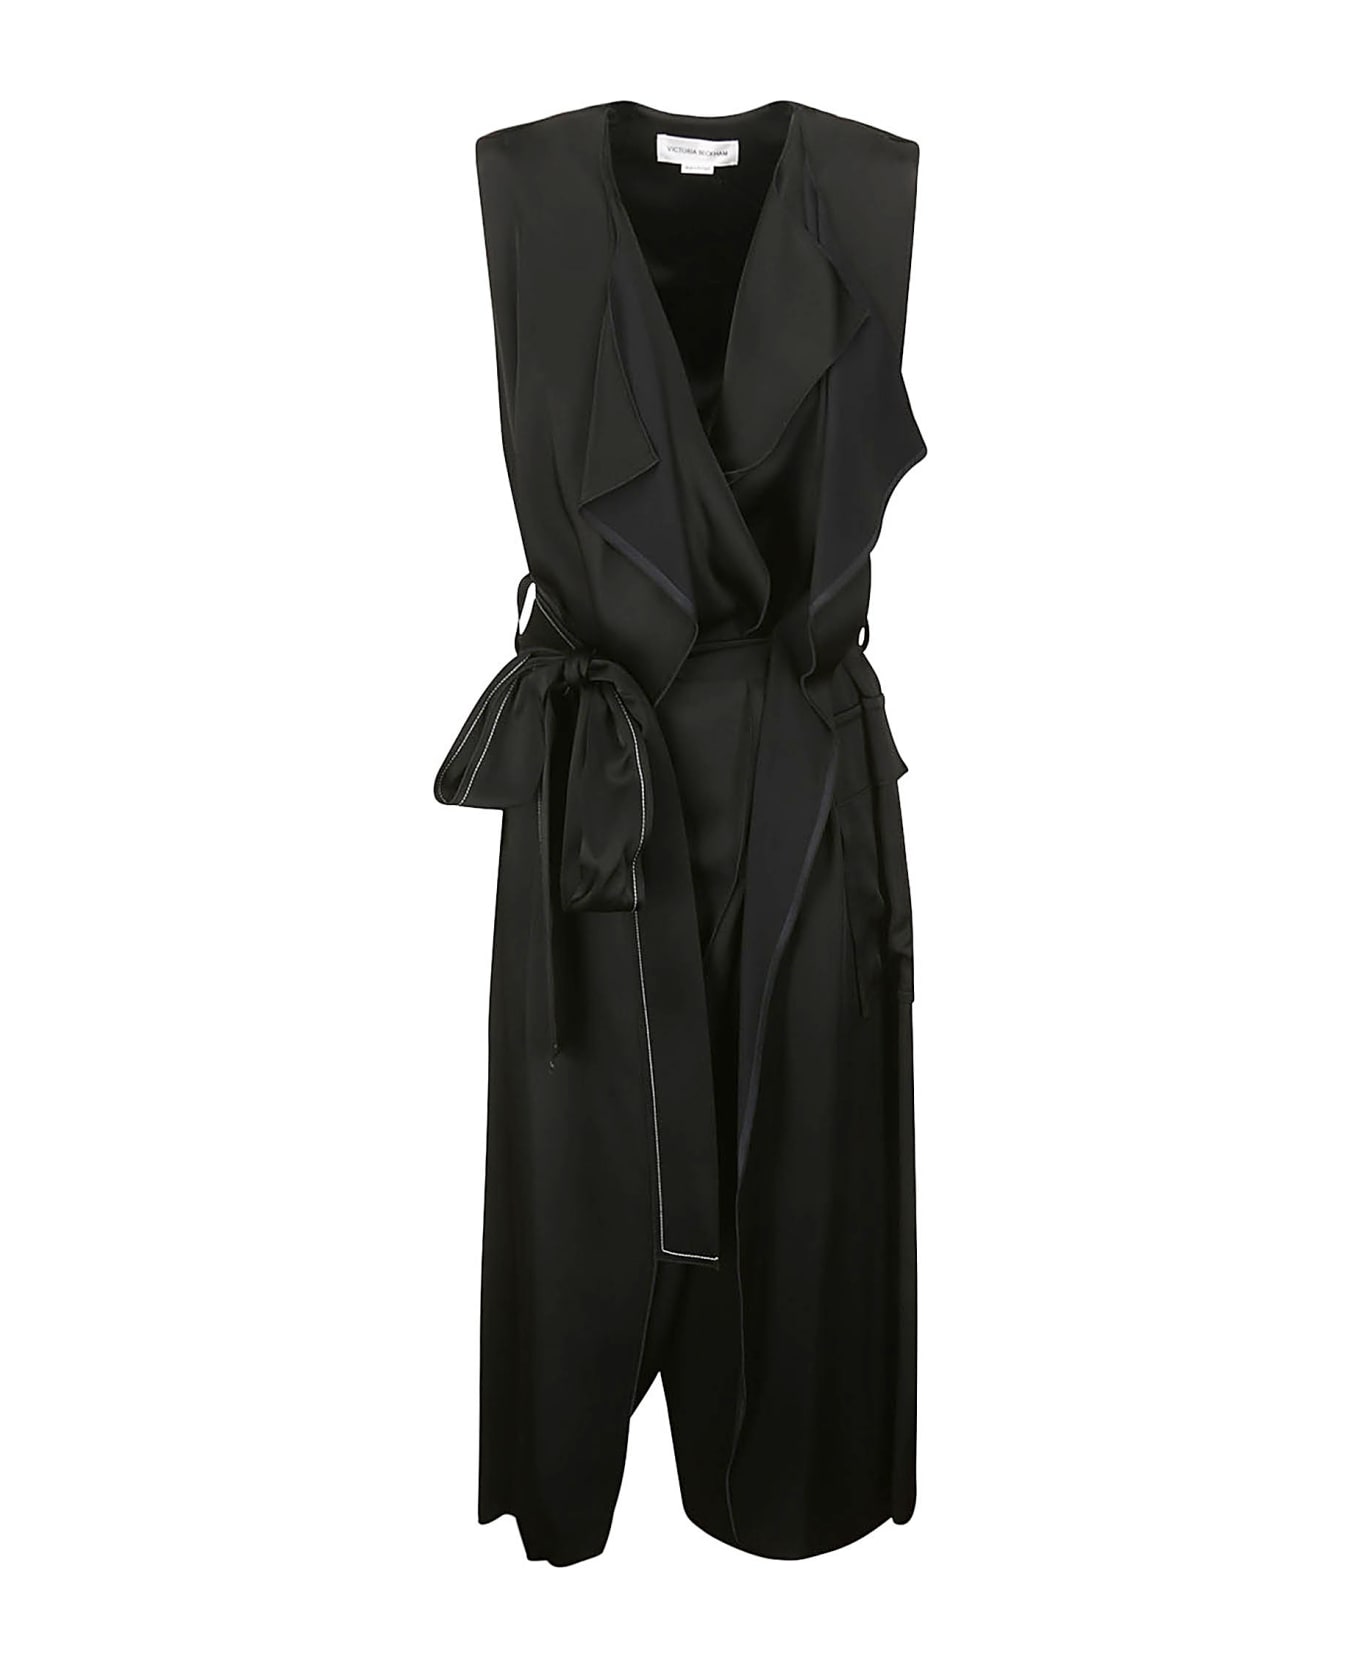 Victoria Beckham Trench Dress - BLACK